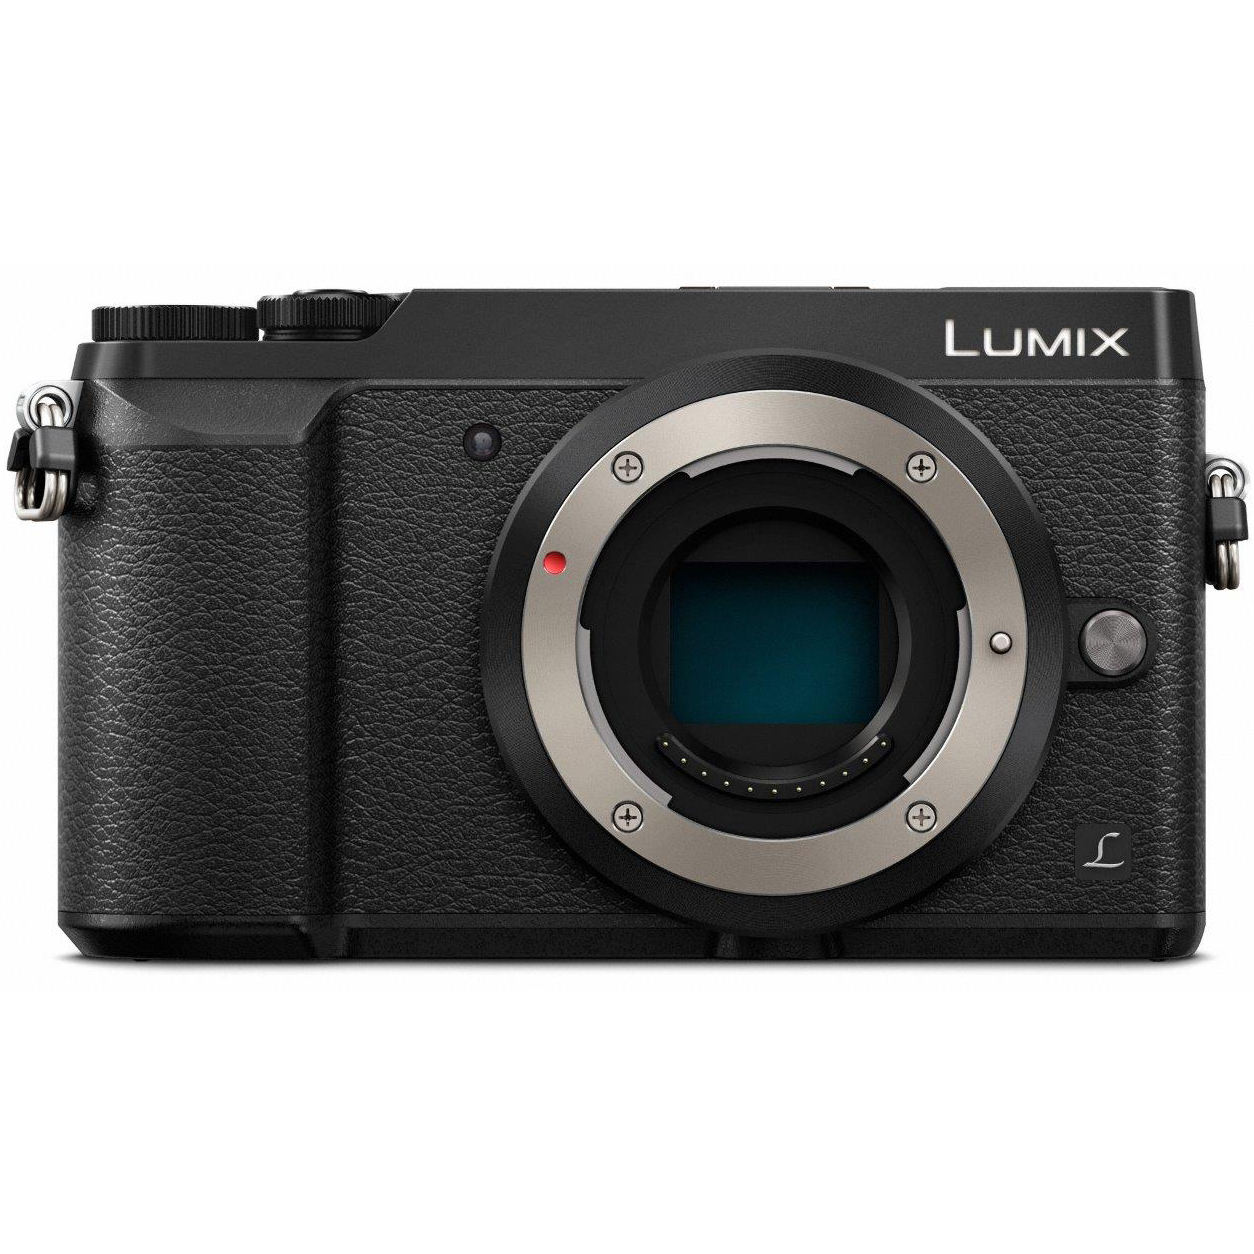 Panasonic LUMIX GX85 4K Mirrorless Camera with 12-32mm & 45-150mm Lenses -Black DMC-GX85WK - image 5 of 10